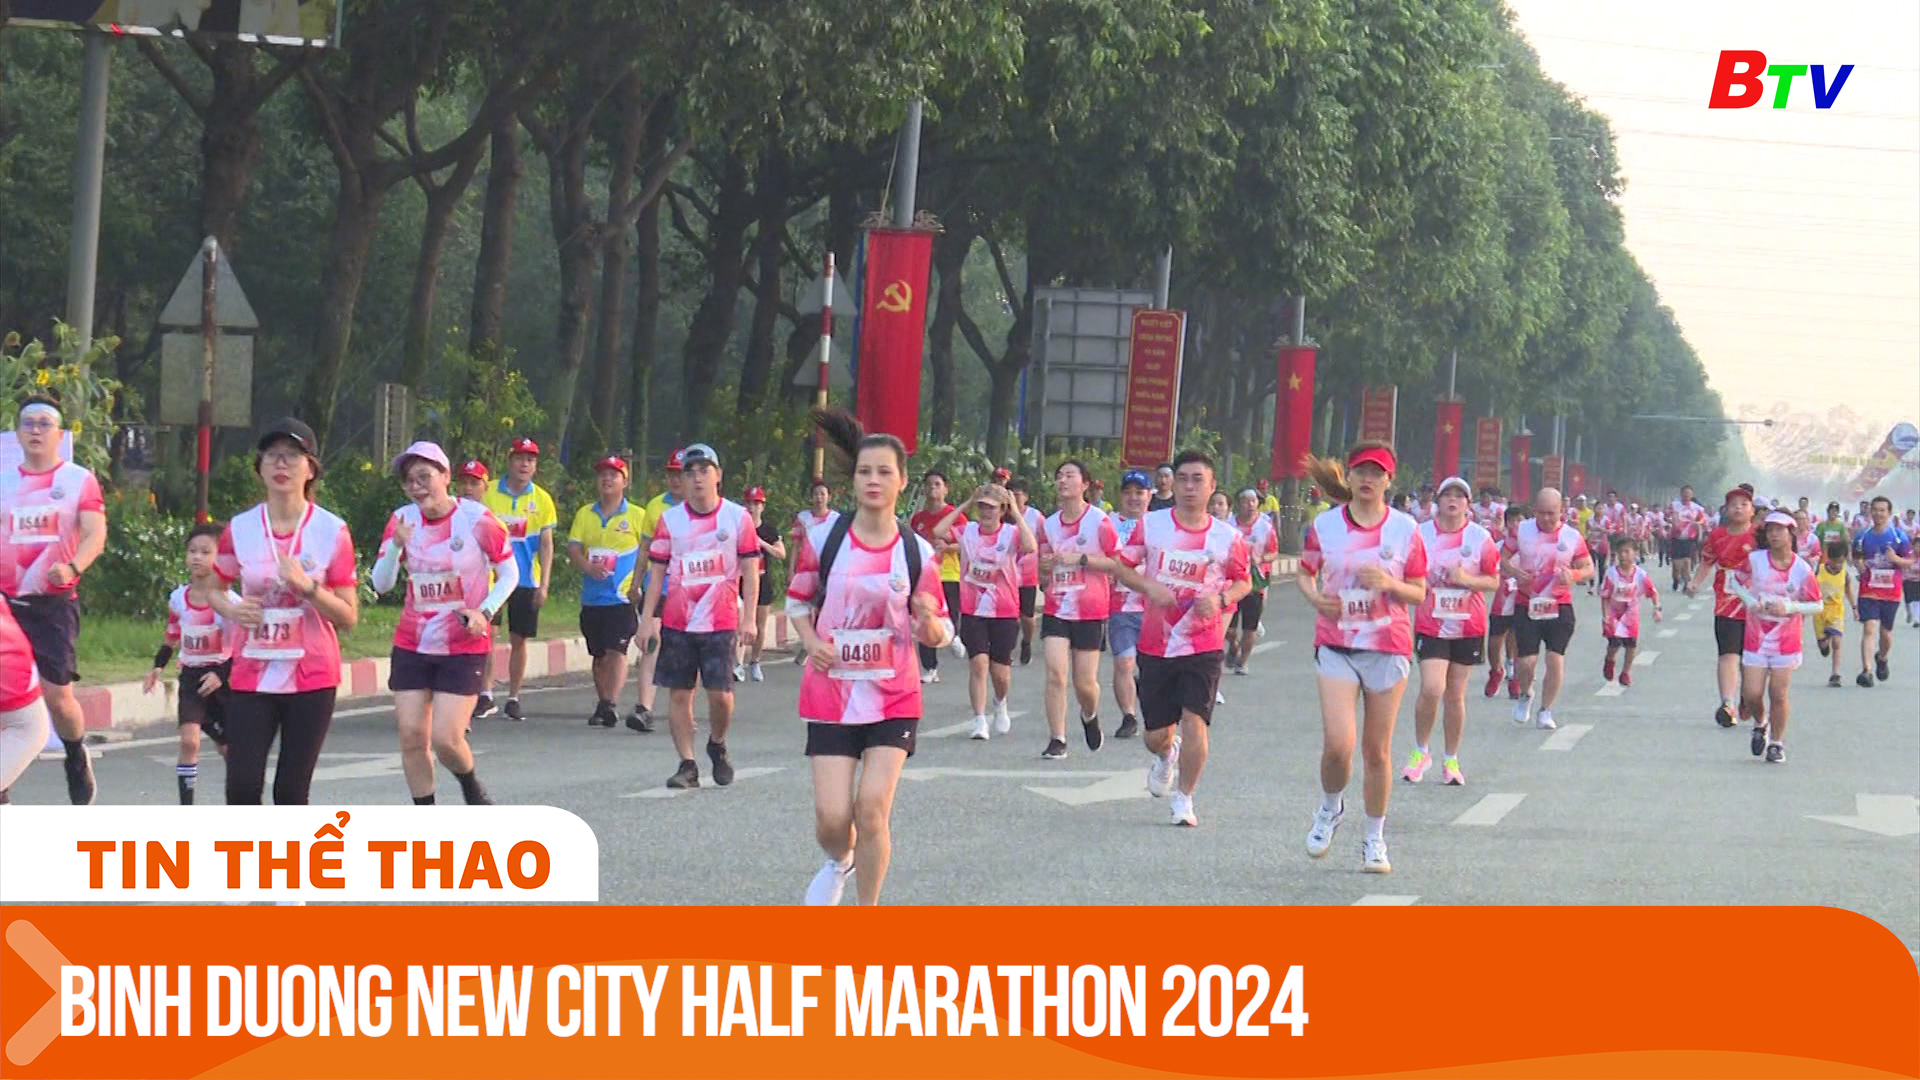 Binh Duong New City Half Marathon 2024 | Tin Thể thao 24h